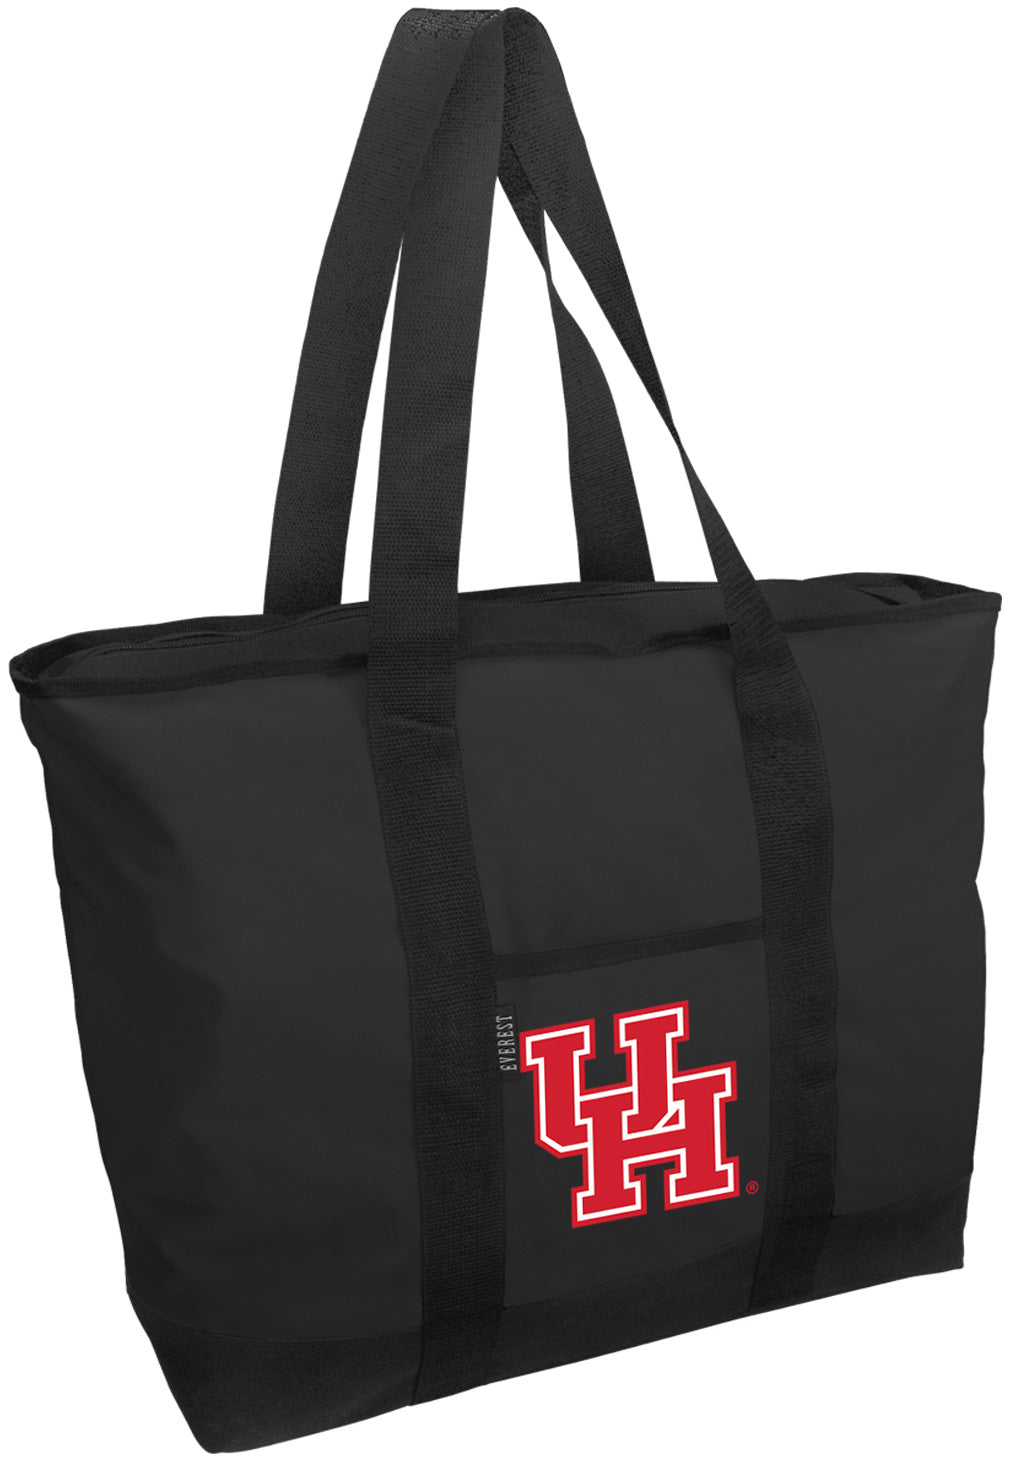 UH Tote Bag University of Houston Large Zippered Tote